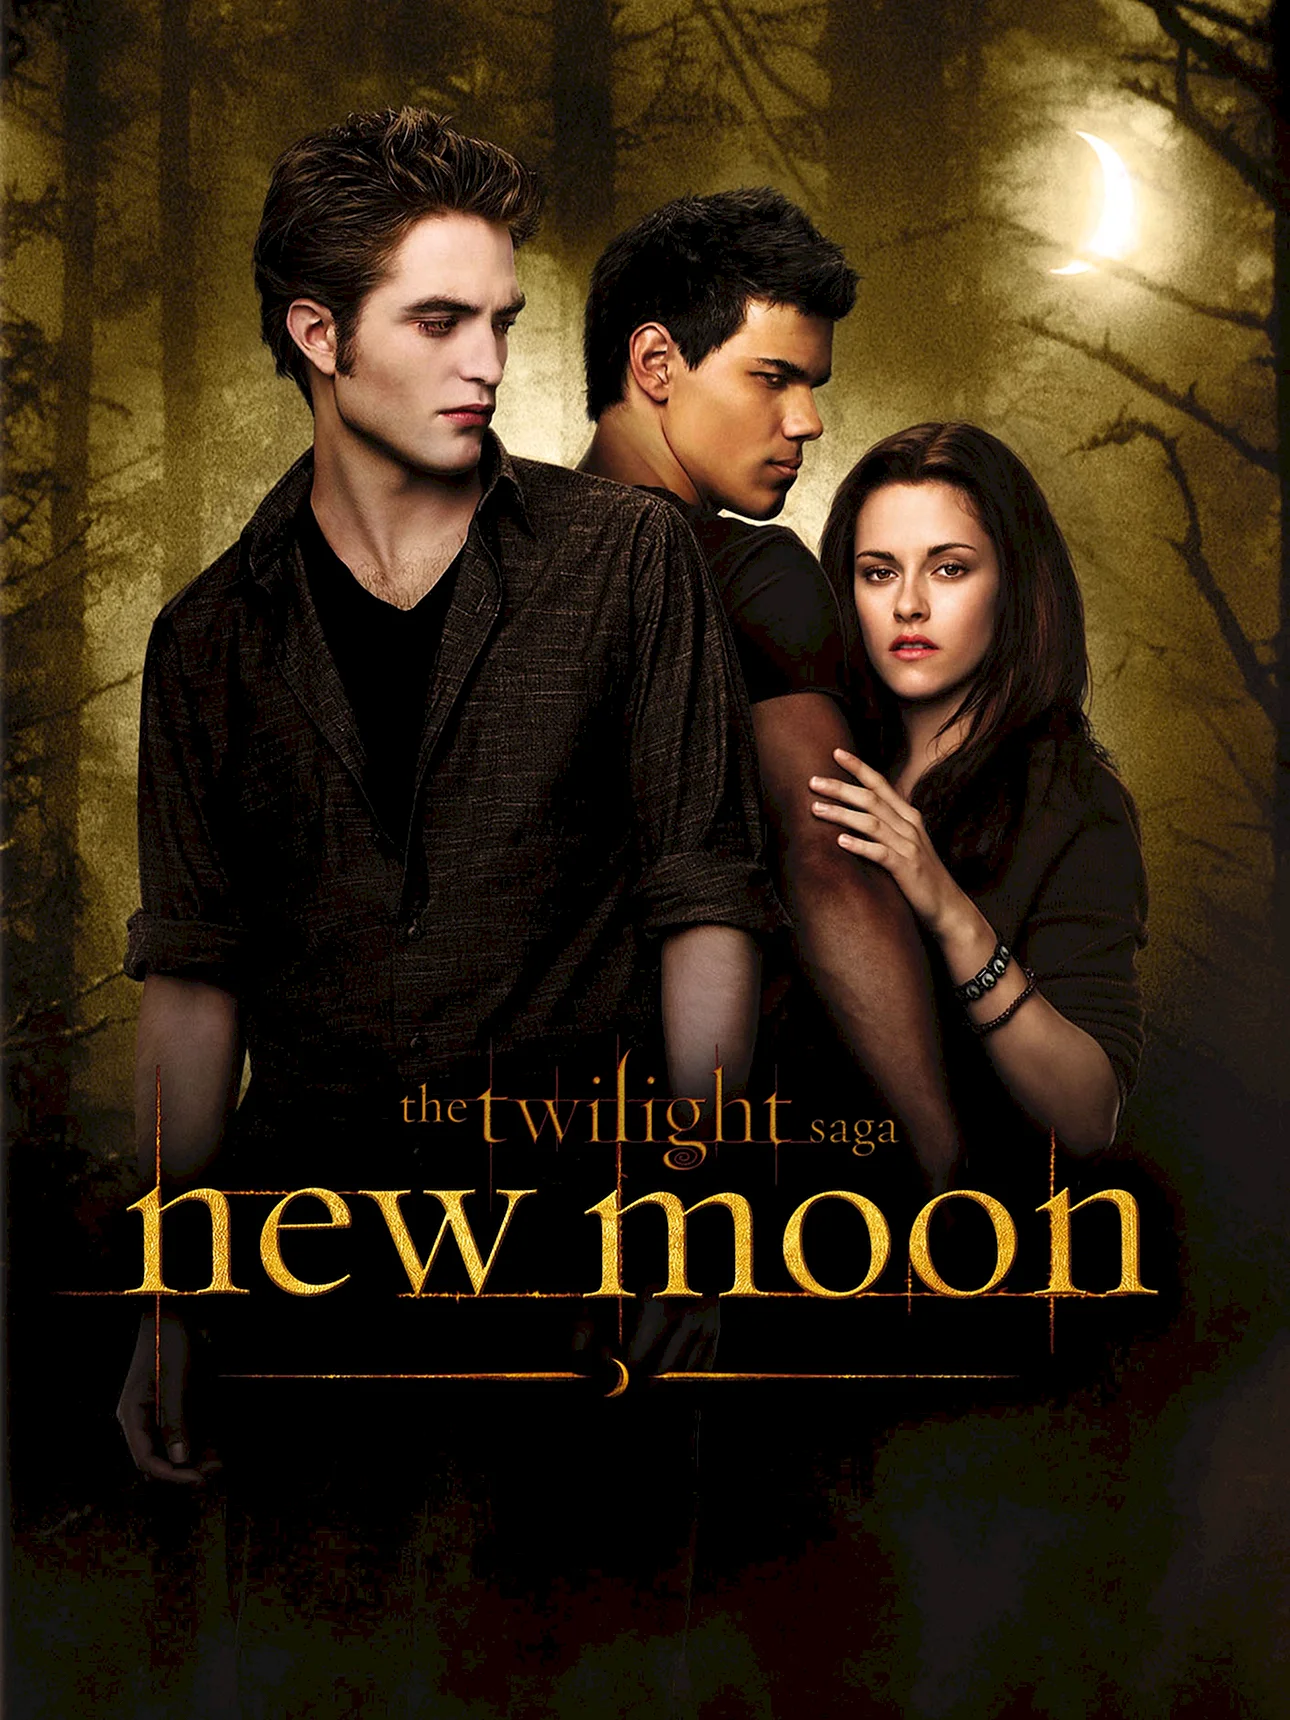 The Twilight Saga New Moon 2009 Wallpaper For iPhone